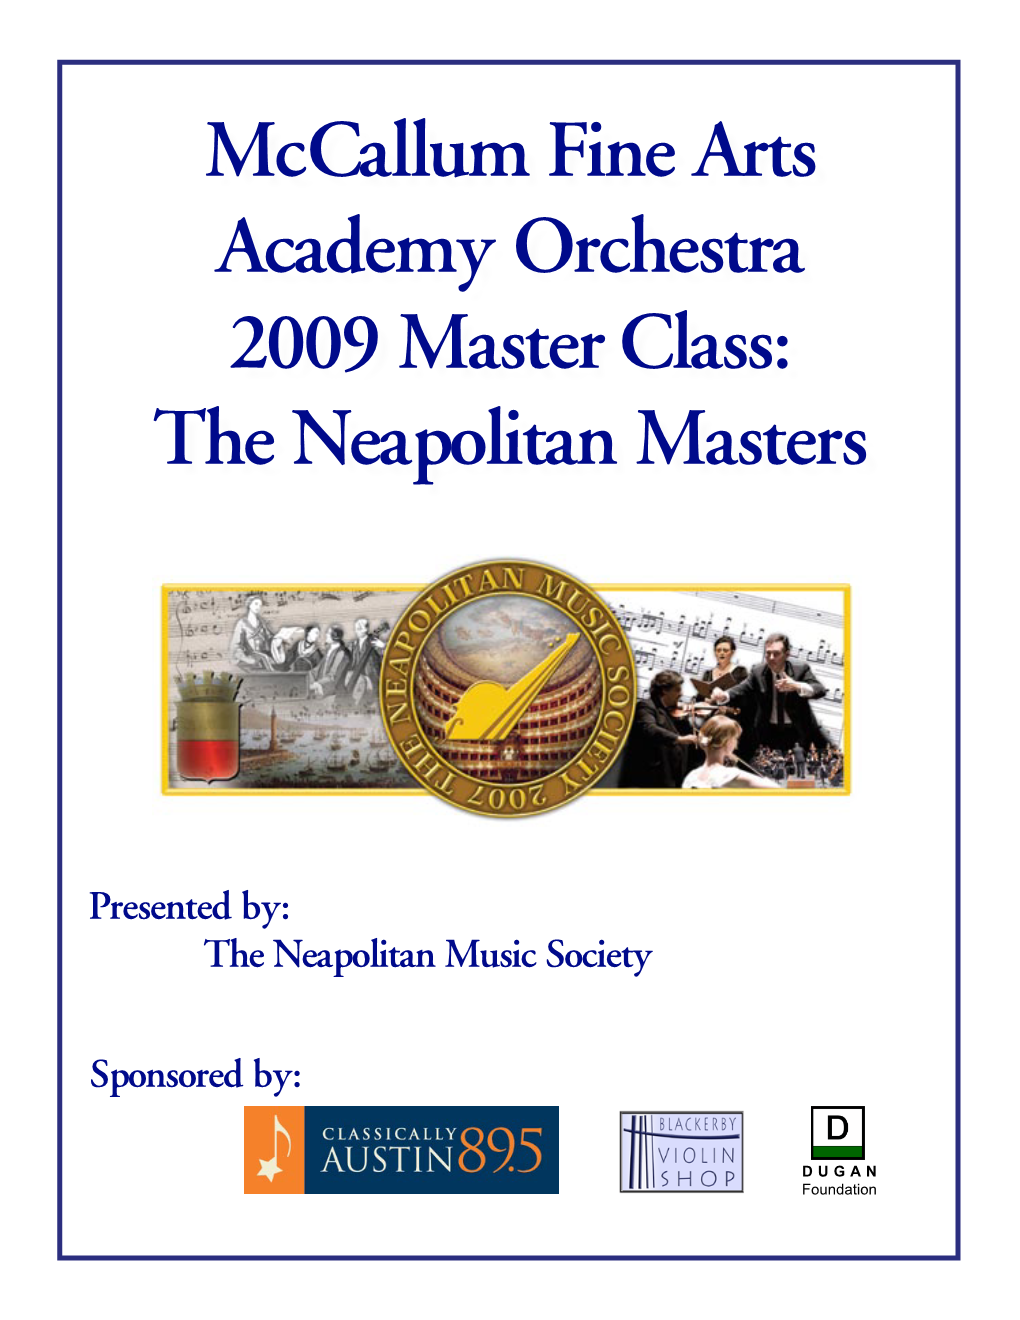 Mccallum Fine Arts Academy Orchestra 2009 Master Class: the Neapolitan Masters